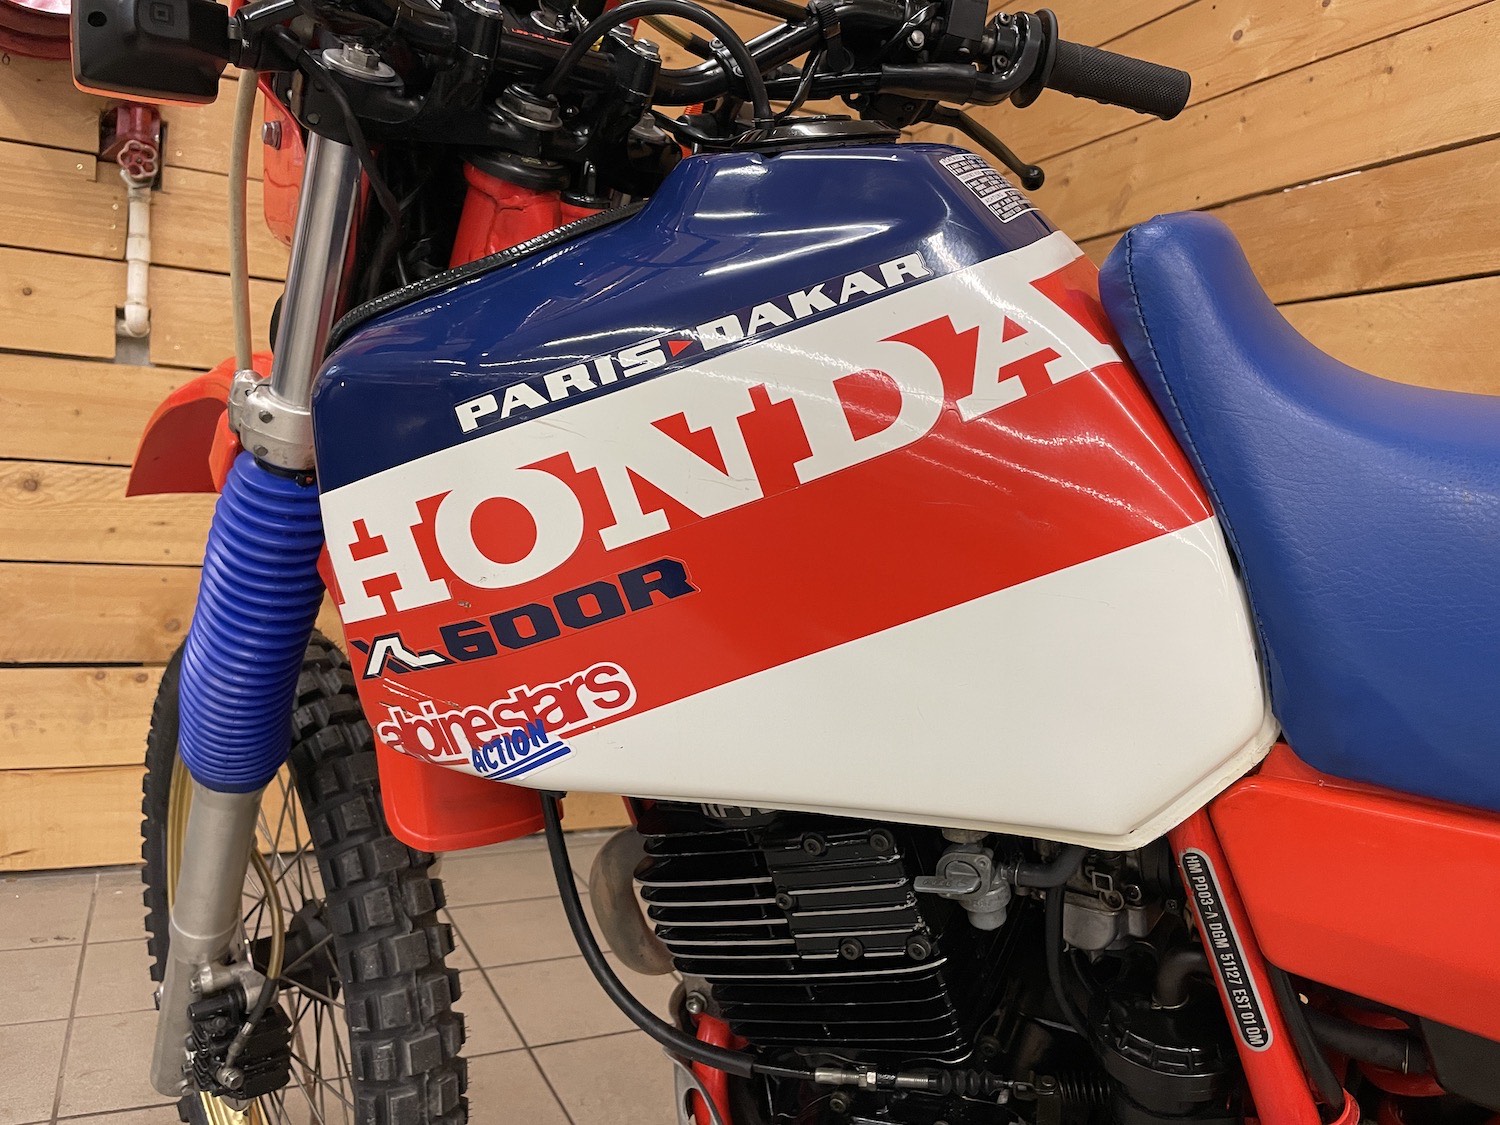 Honda_XL600R_ParisDakar_84_cezanne_classic_motorcycle_9-117.jpg